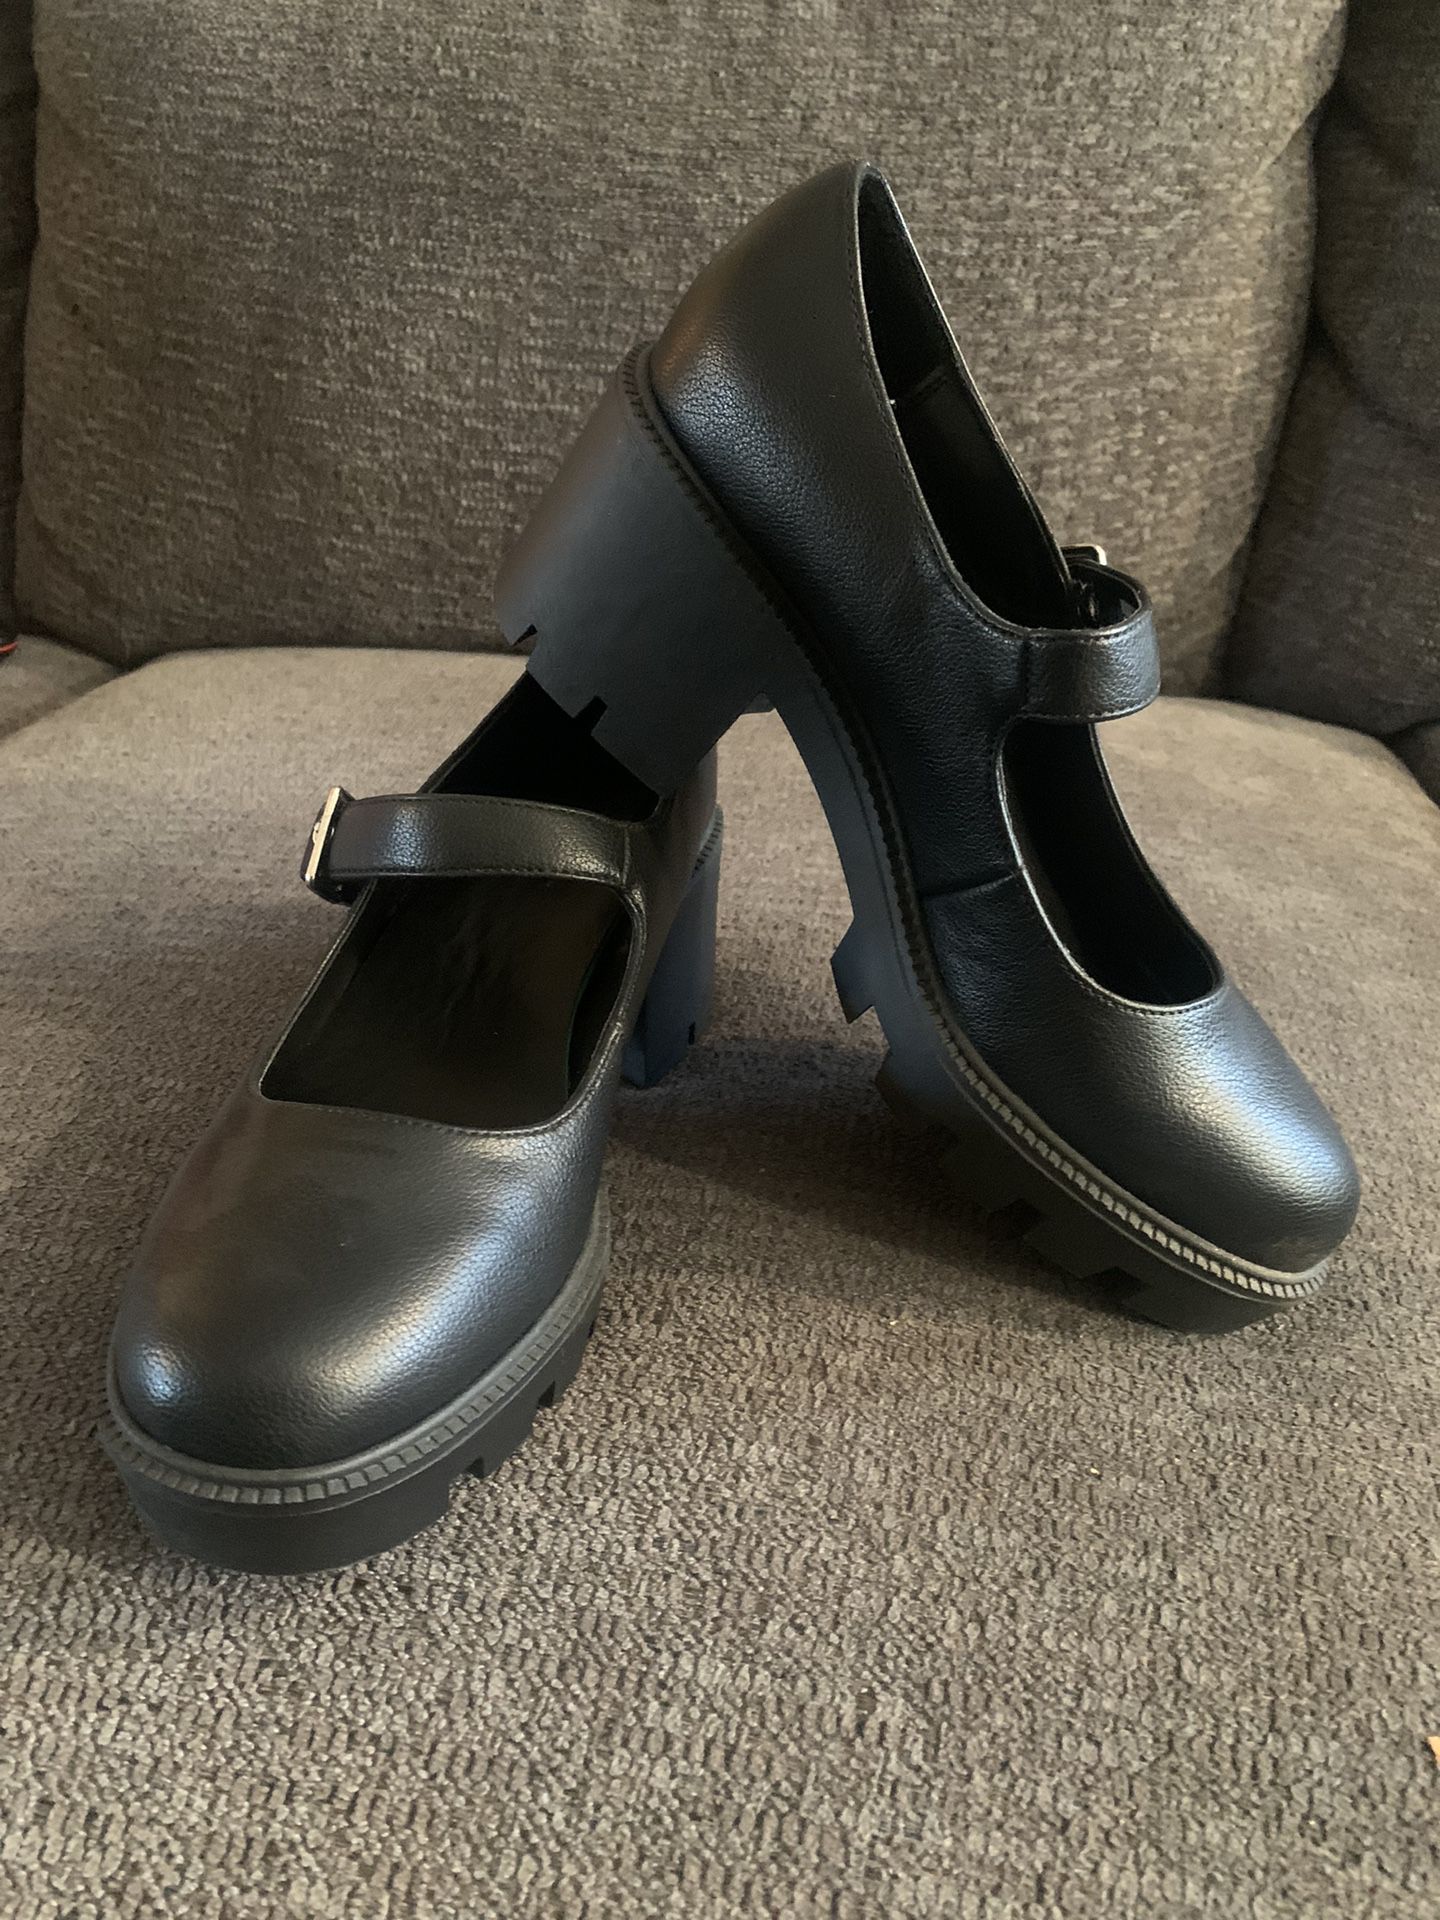 Dolce Vita Shoes/heels